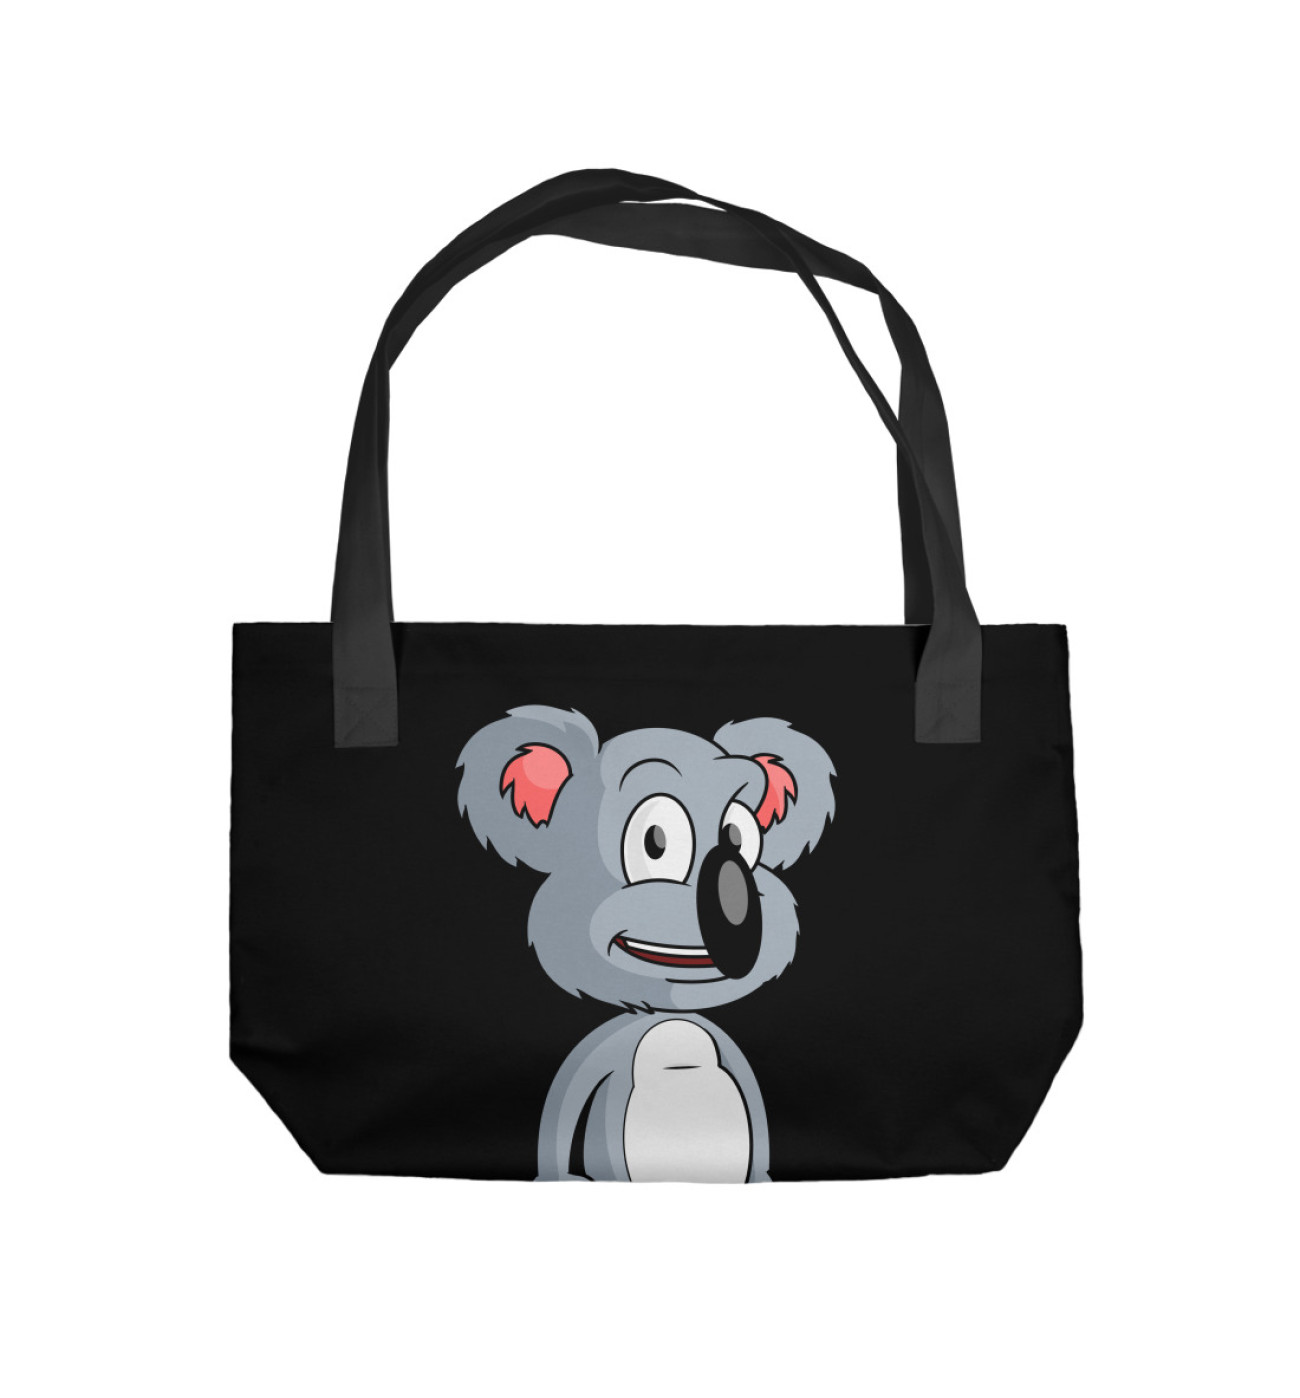 Коала сумка. Koala-Bags сумки. Сумка коалы. Сумочка коала. Бренд сумок с коалой.